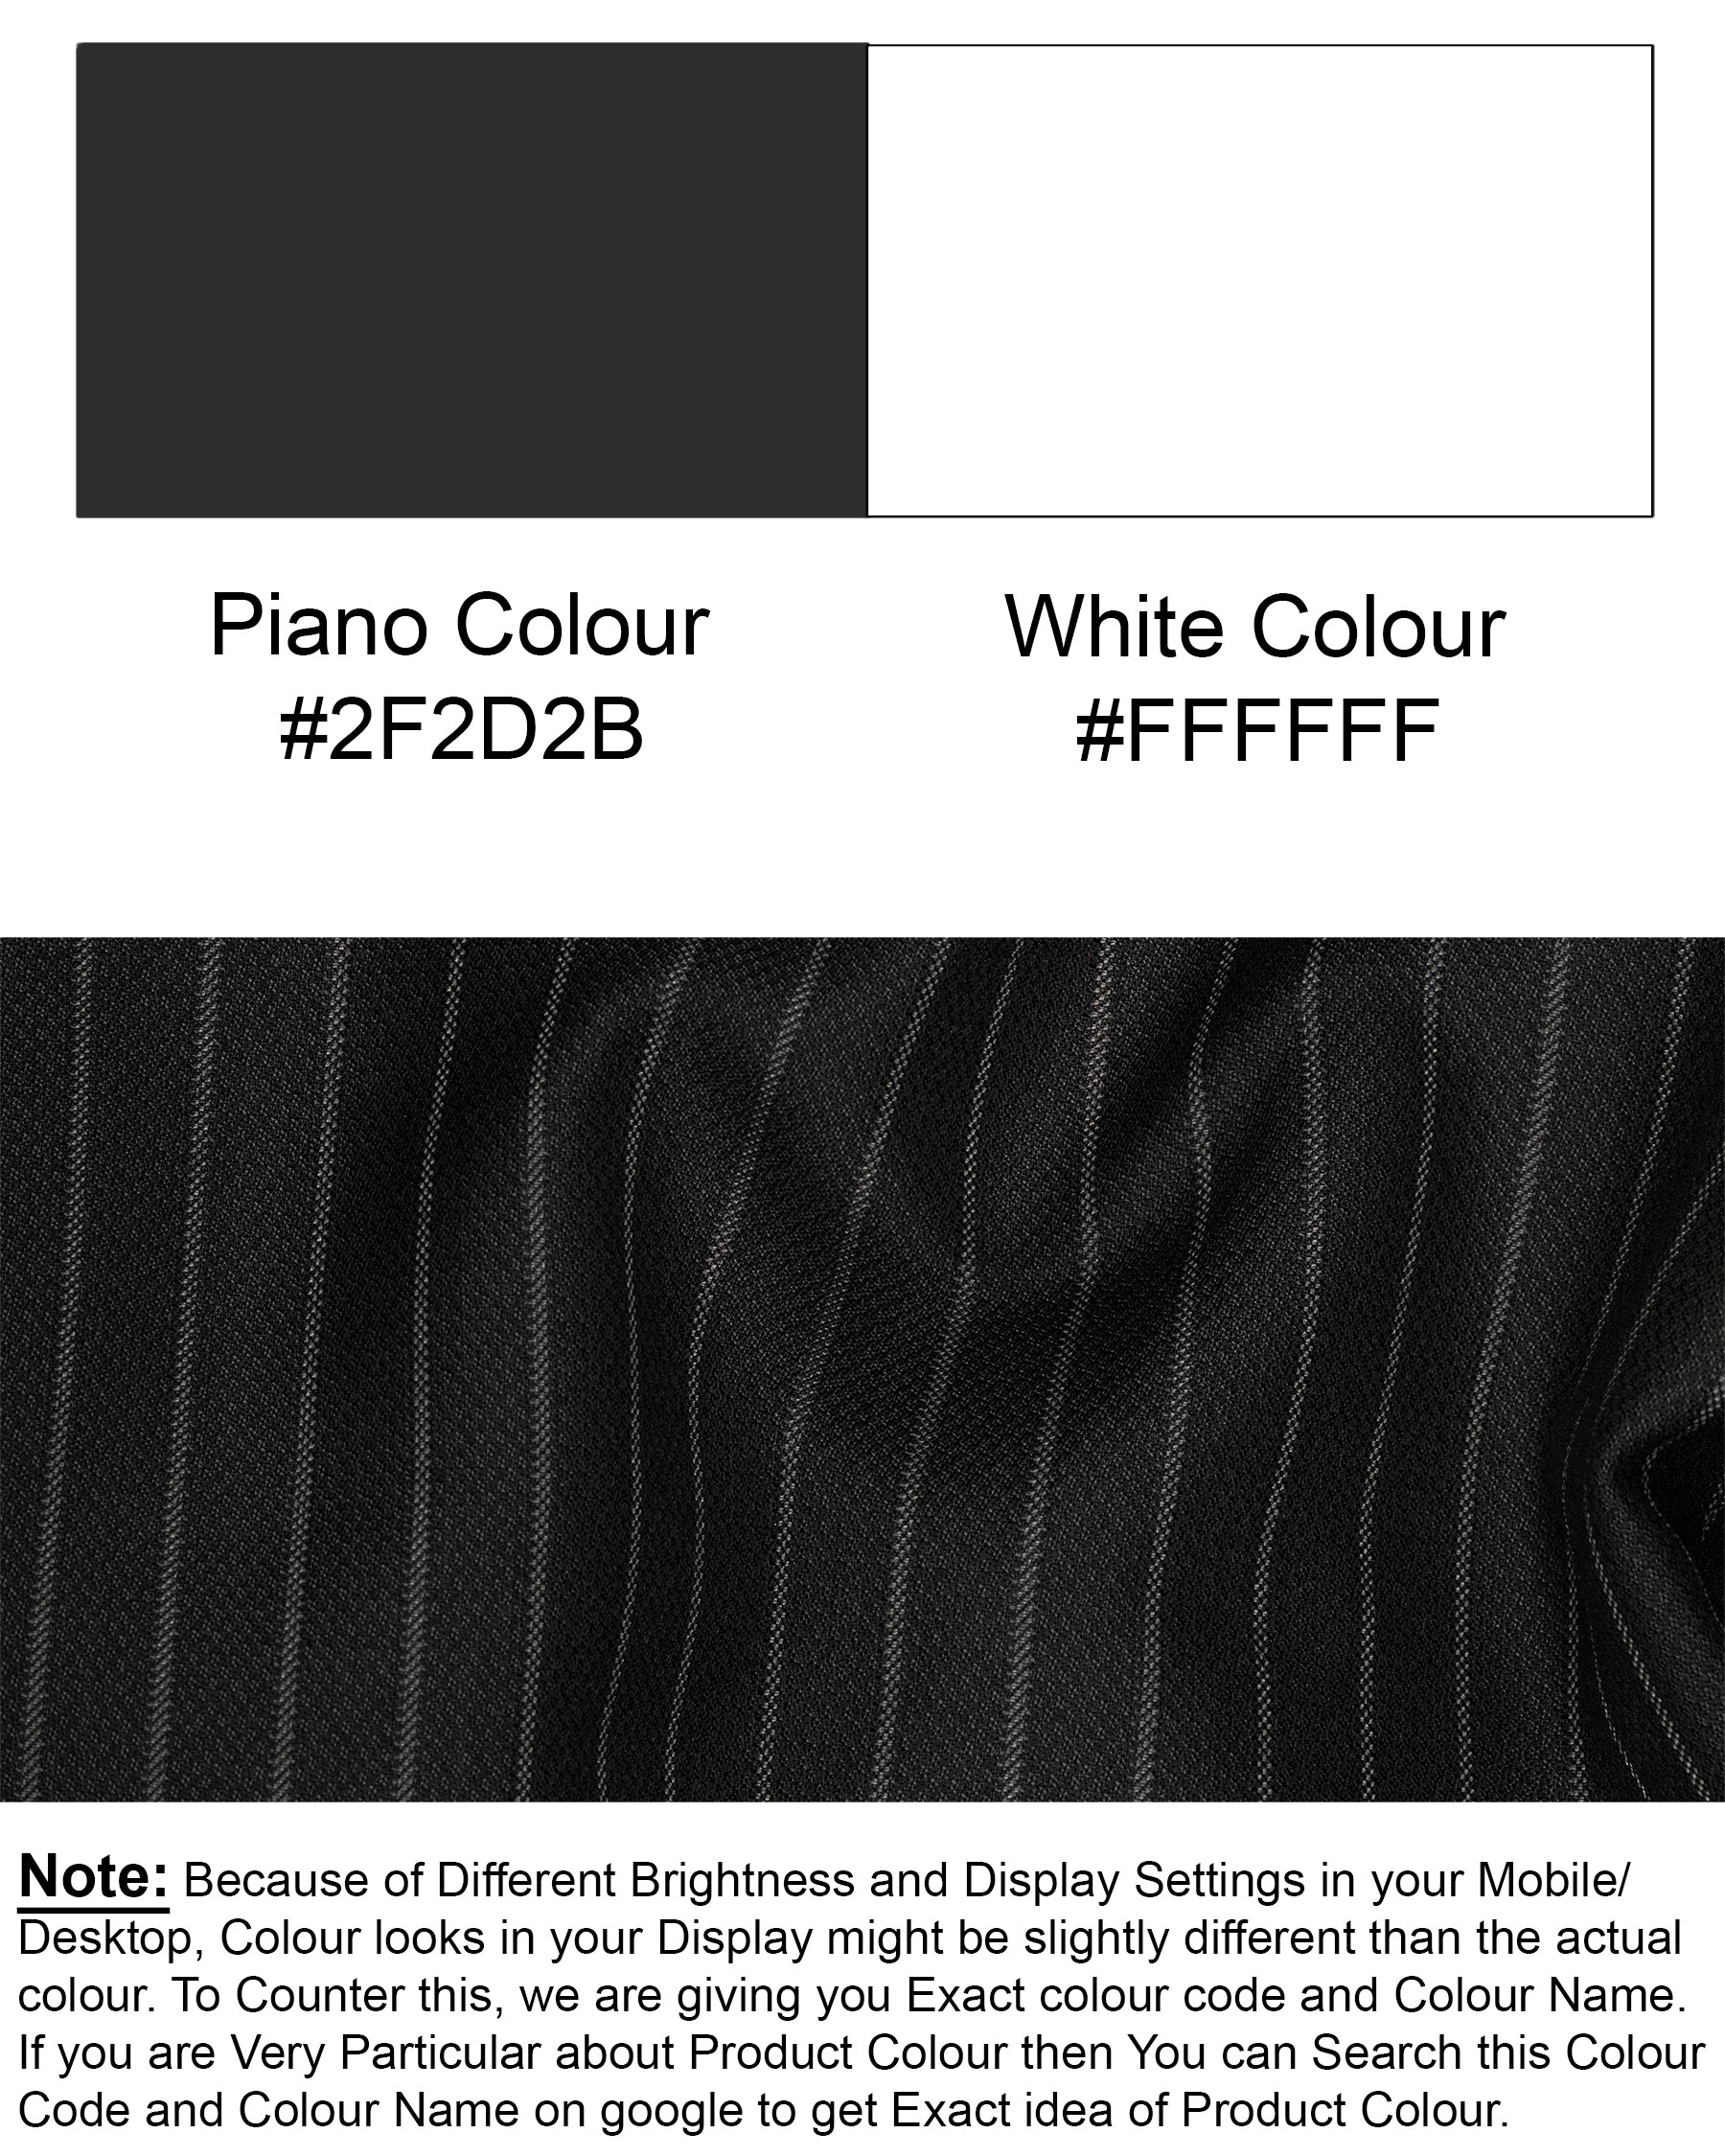 Piano Black Striped Cross Button Woolrich Bandhgala Suit ST1618-CBG2-36, ST1618-CBG2-38, ST1618-CBG2-40, ST1618-CBG2-42, ST1618-CBG2-44, ST1618-CBG2-46, ST1618-CBG2-48, ST1618-CBG2-50, ST1618-CBG2-52, ST1618-CBG2-54, ST1618-CBG2-56, ST1618-CBG2-58, ST1618-CBG2-60